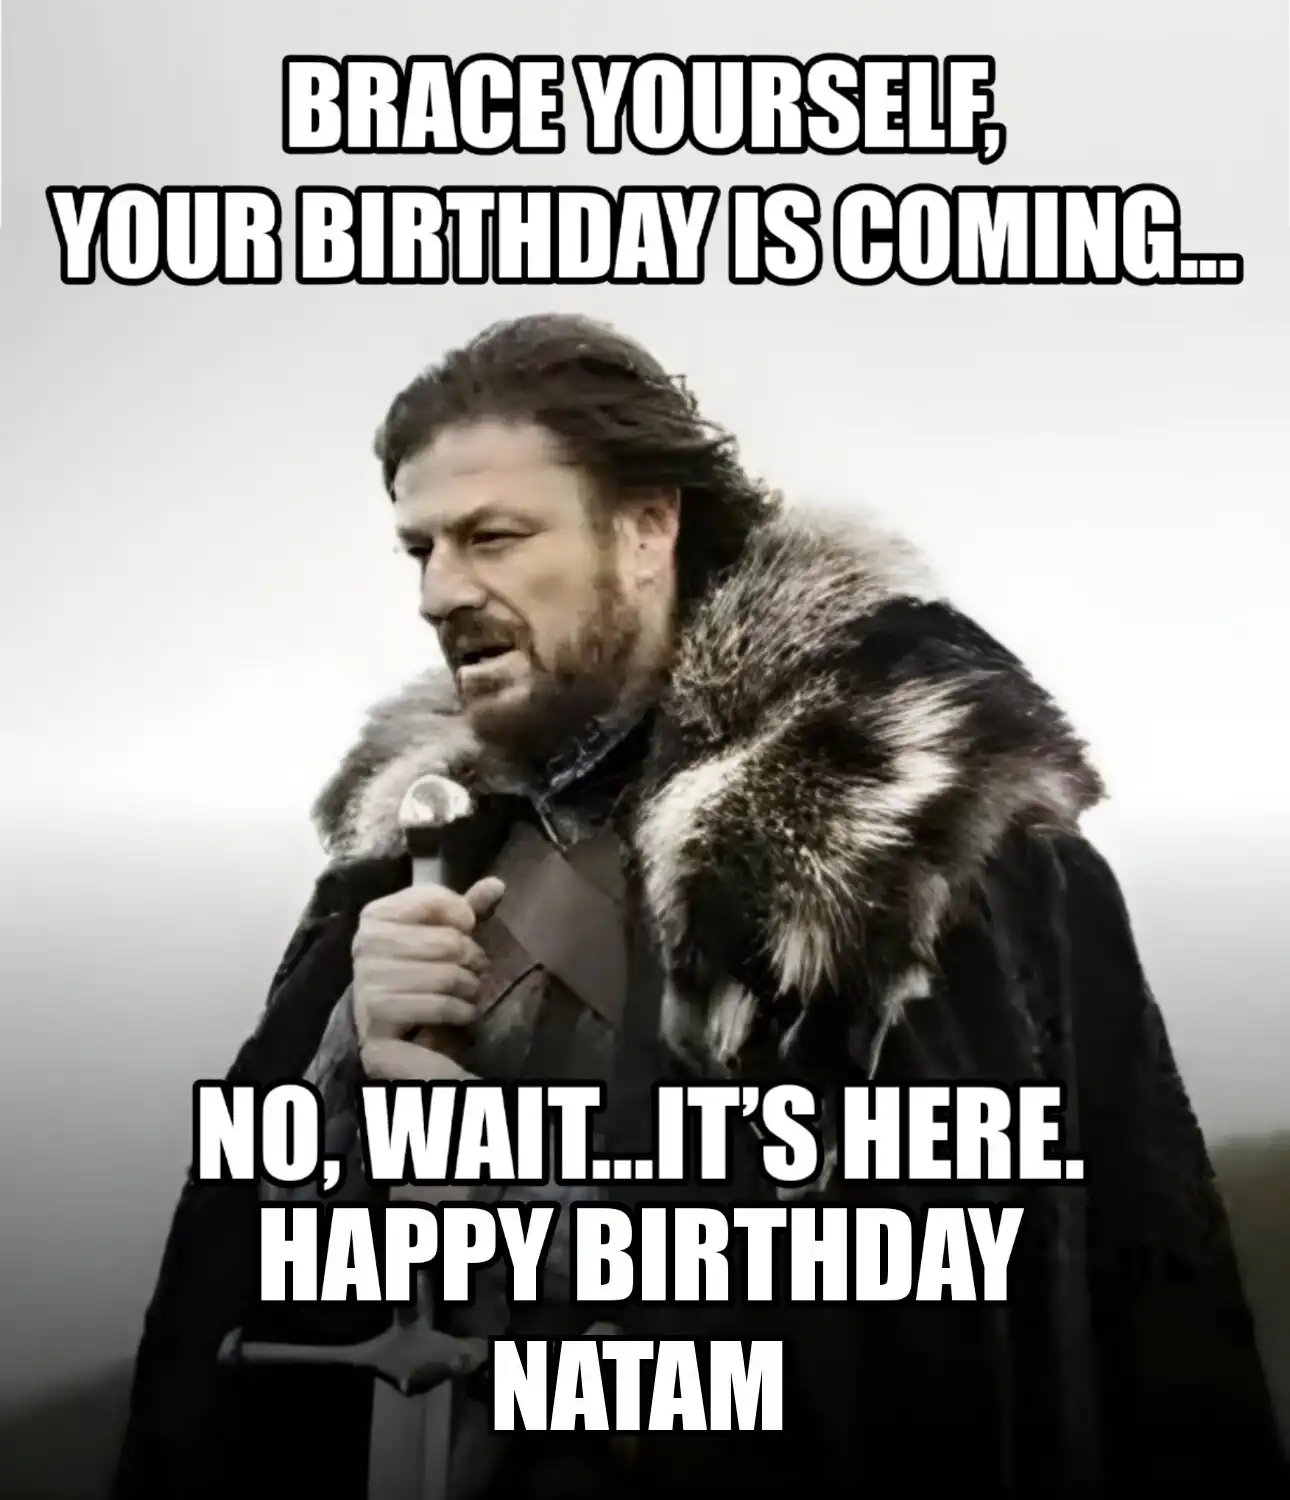 Happy Birthday Natam Brace Yourself Your Birthday Is Coming Meme